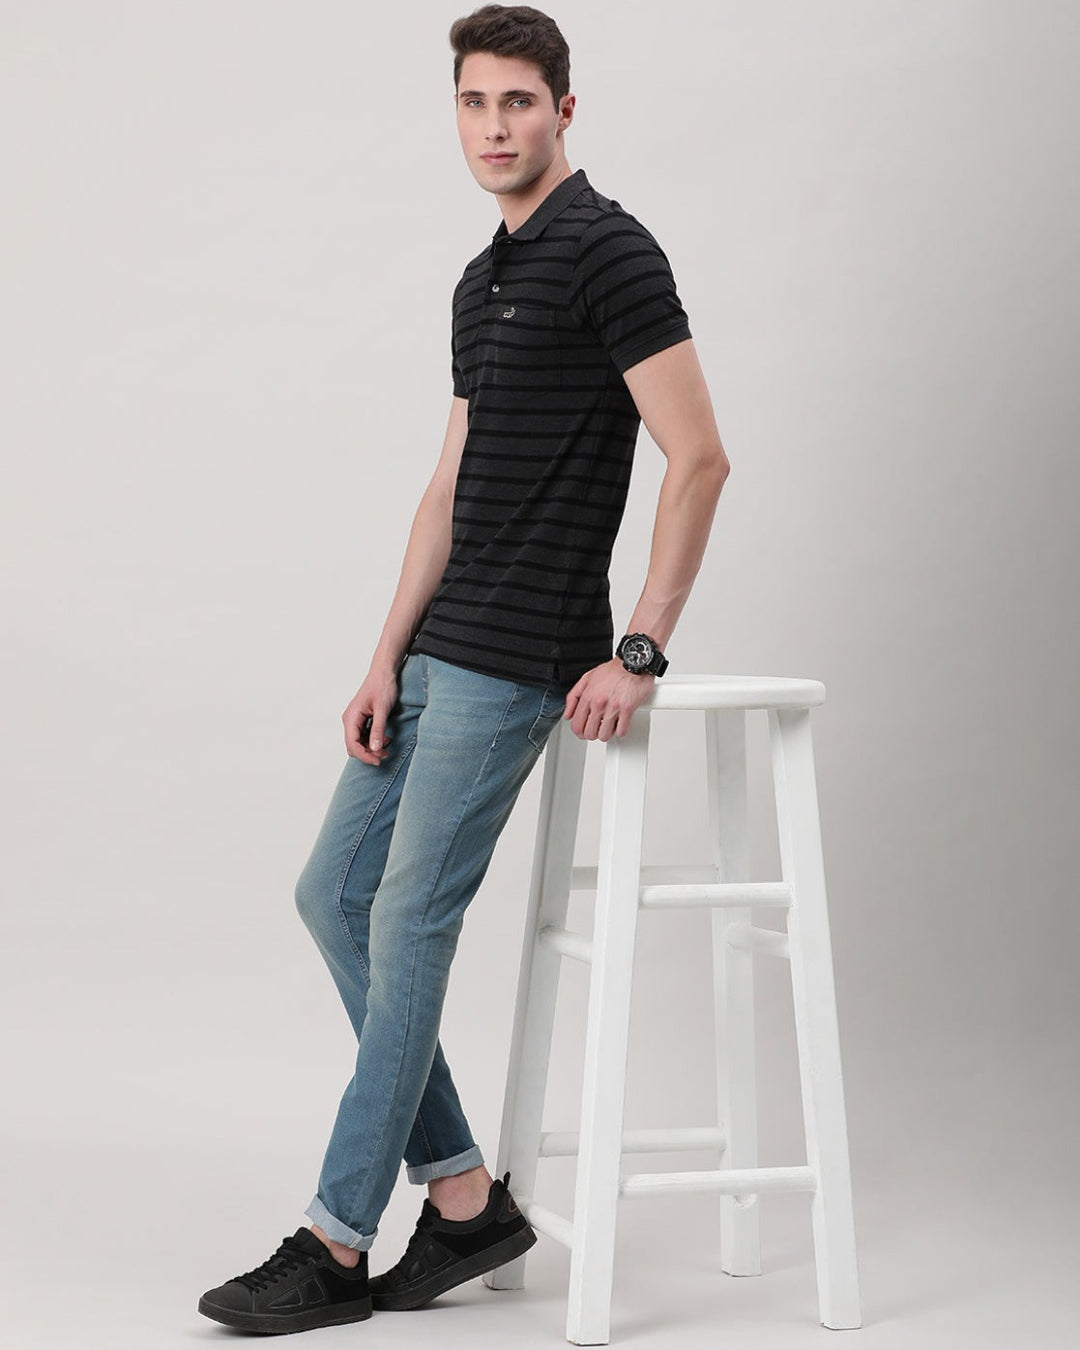 Crocodile Casual Black T-Shirt Striper Half Sleeve Slim Fit with Collar